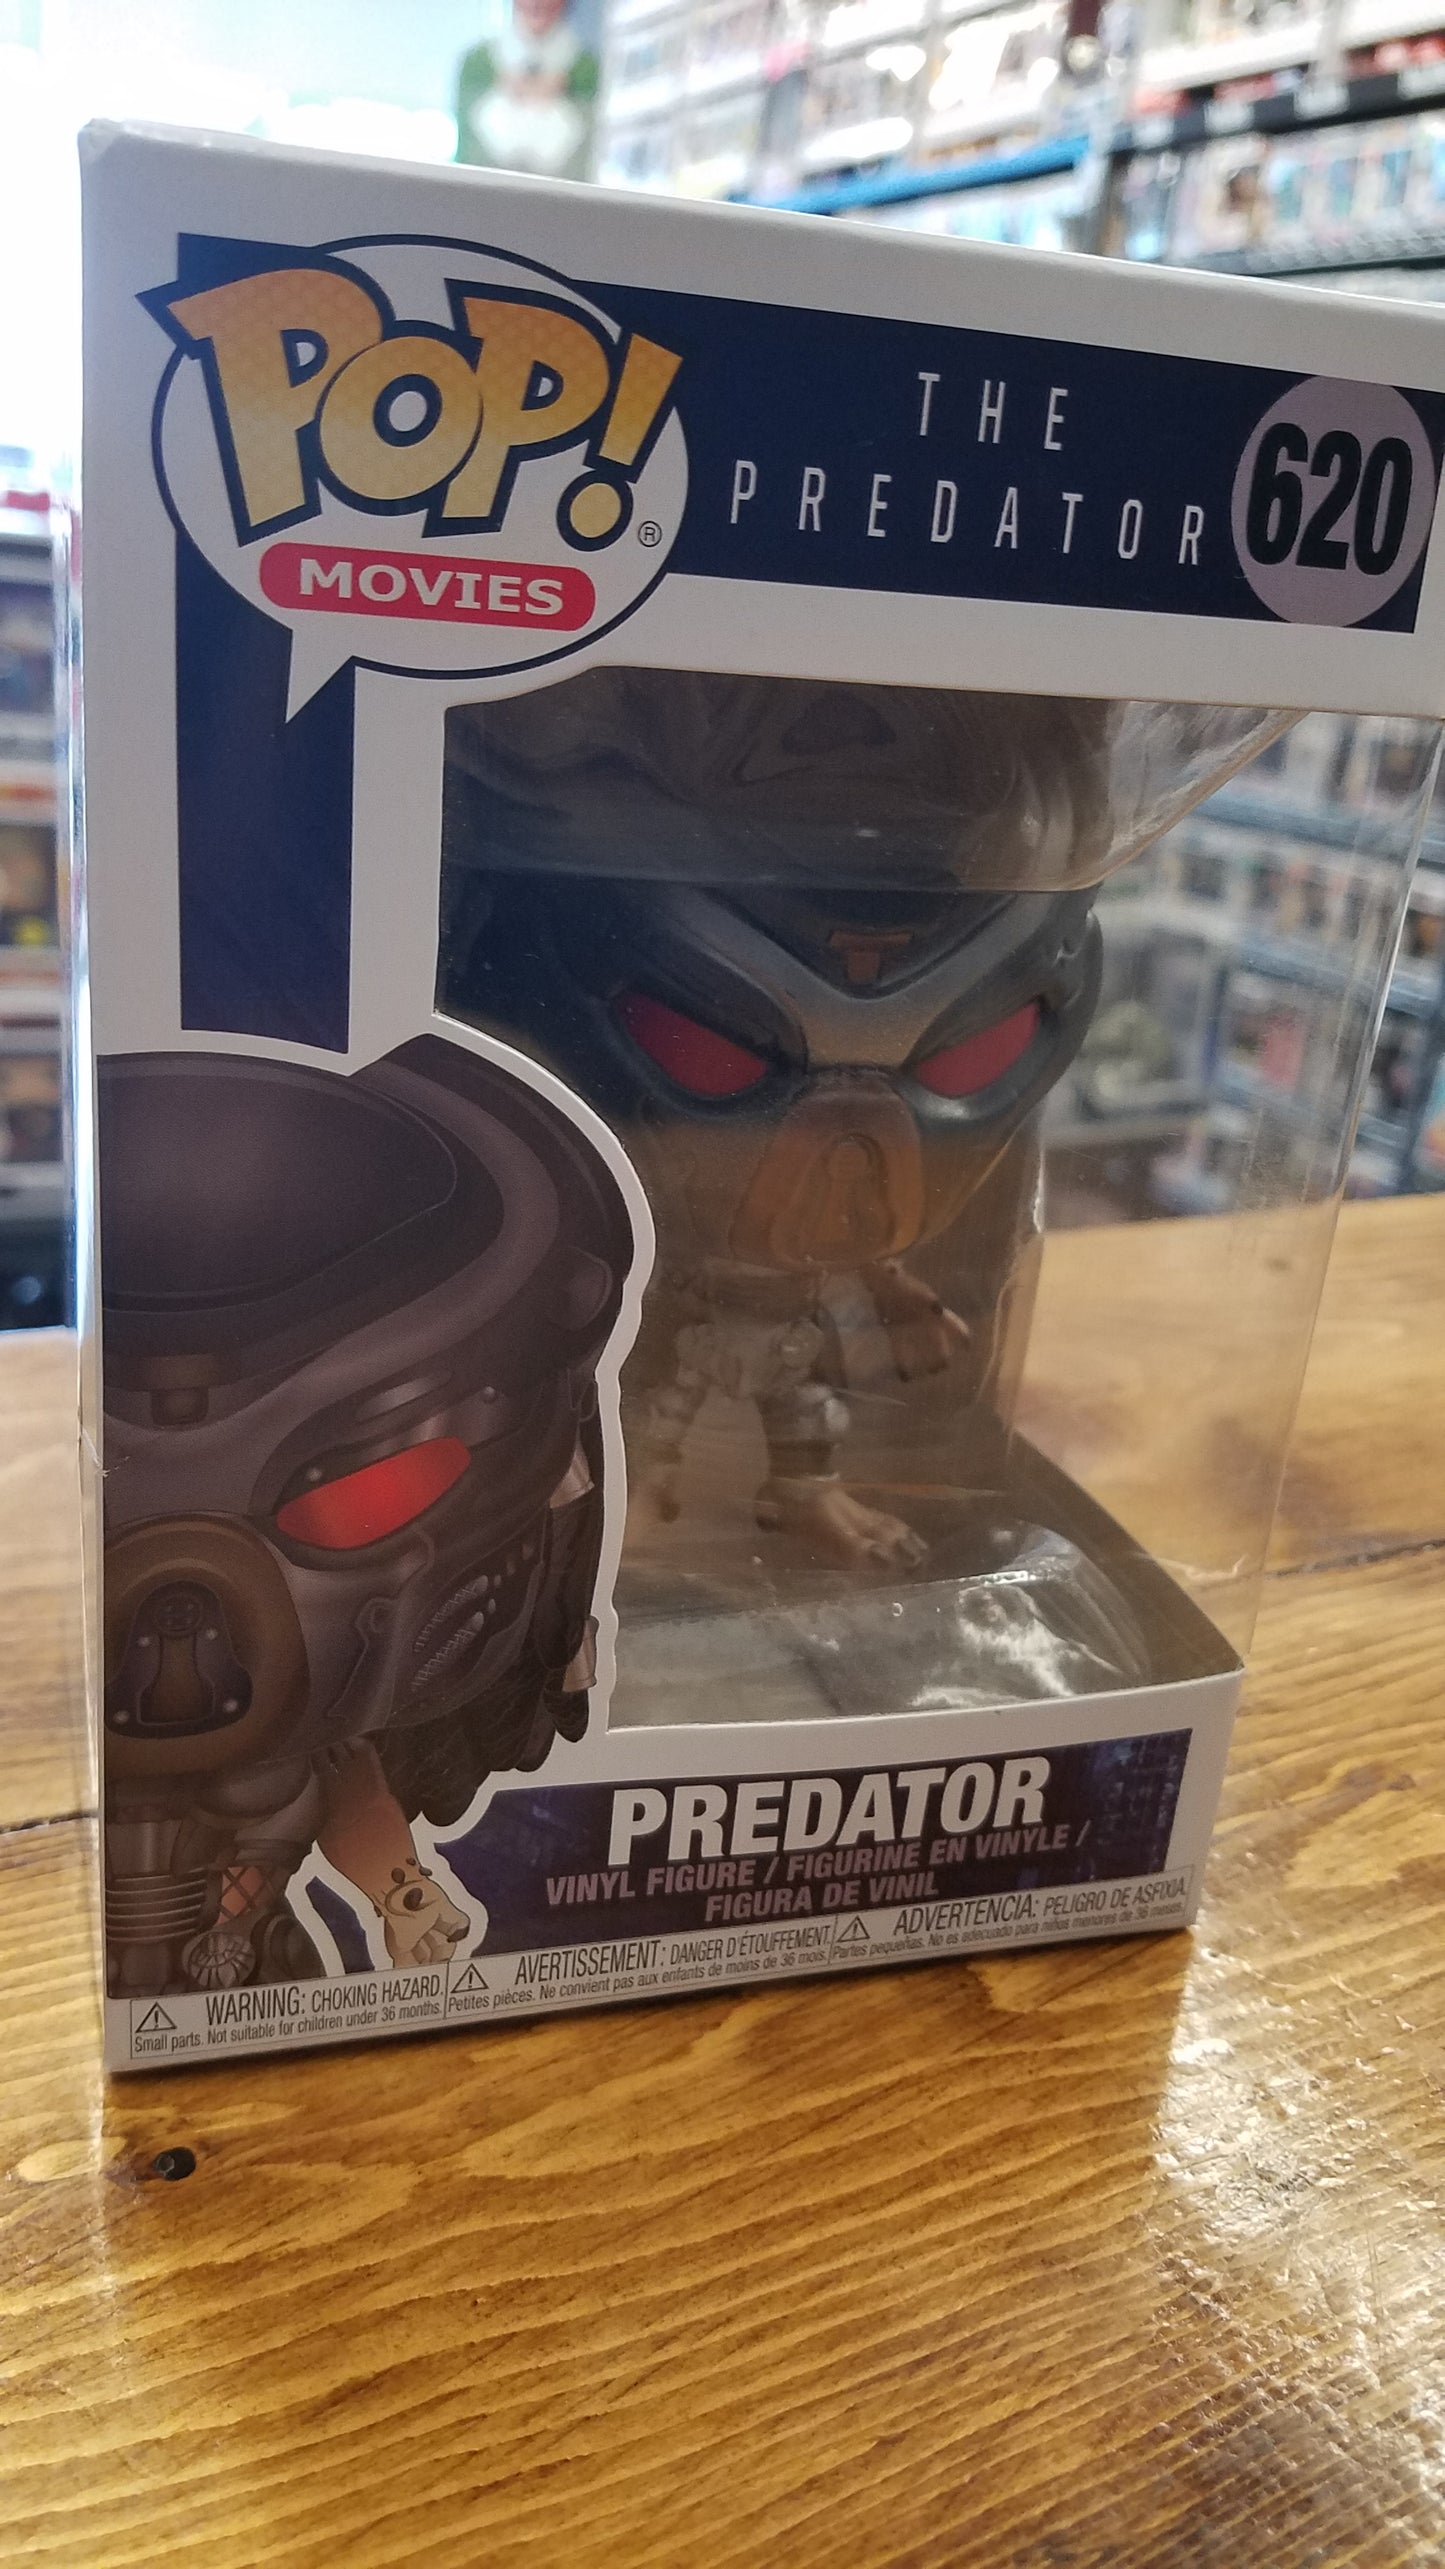 The Predator Movie Predator 620 Funko Pop! Vinyl figure